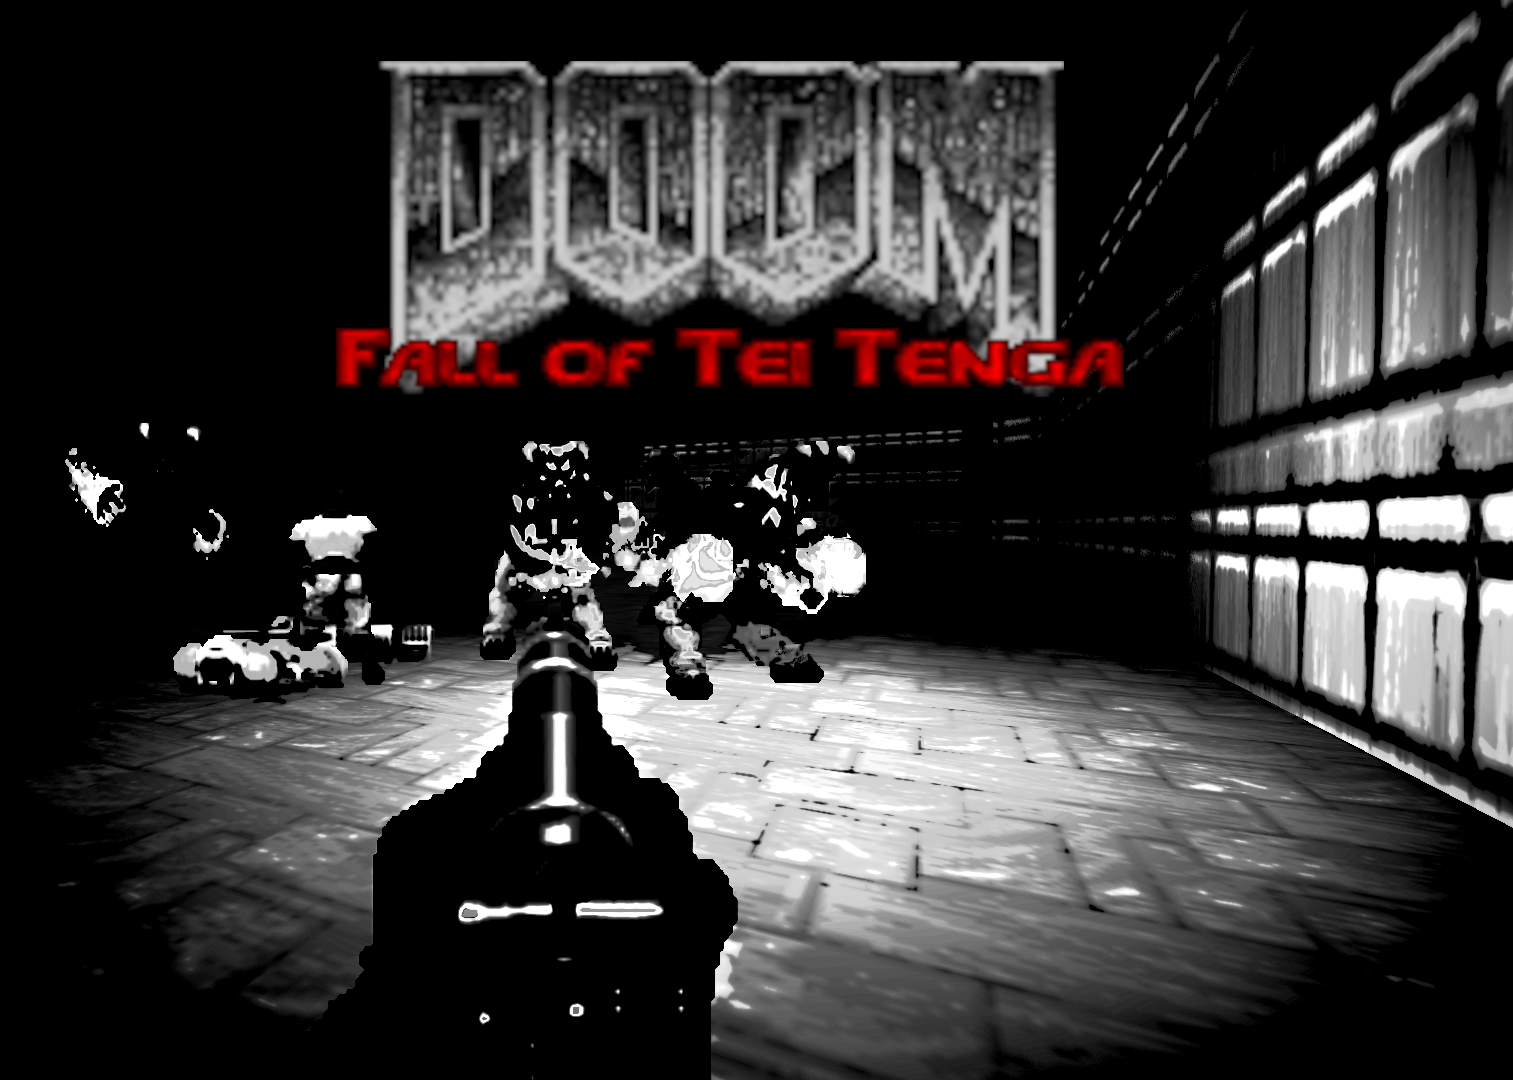 An Introduction to DOOM: Fall of Tei Tenga